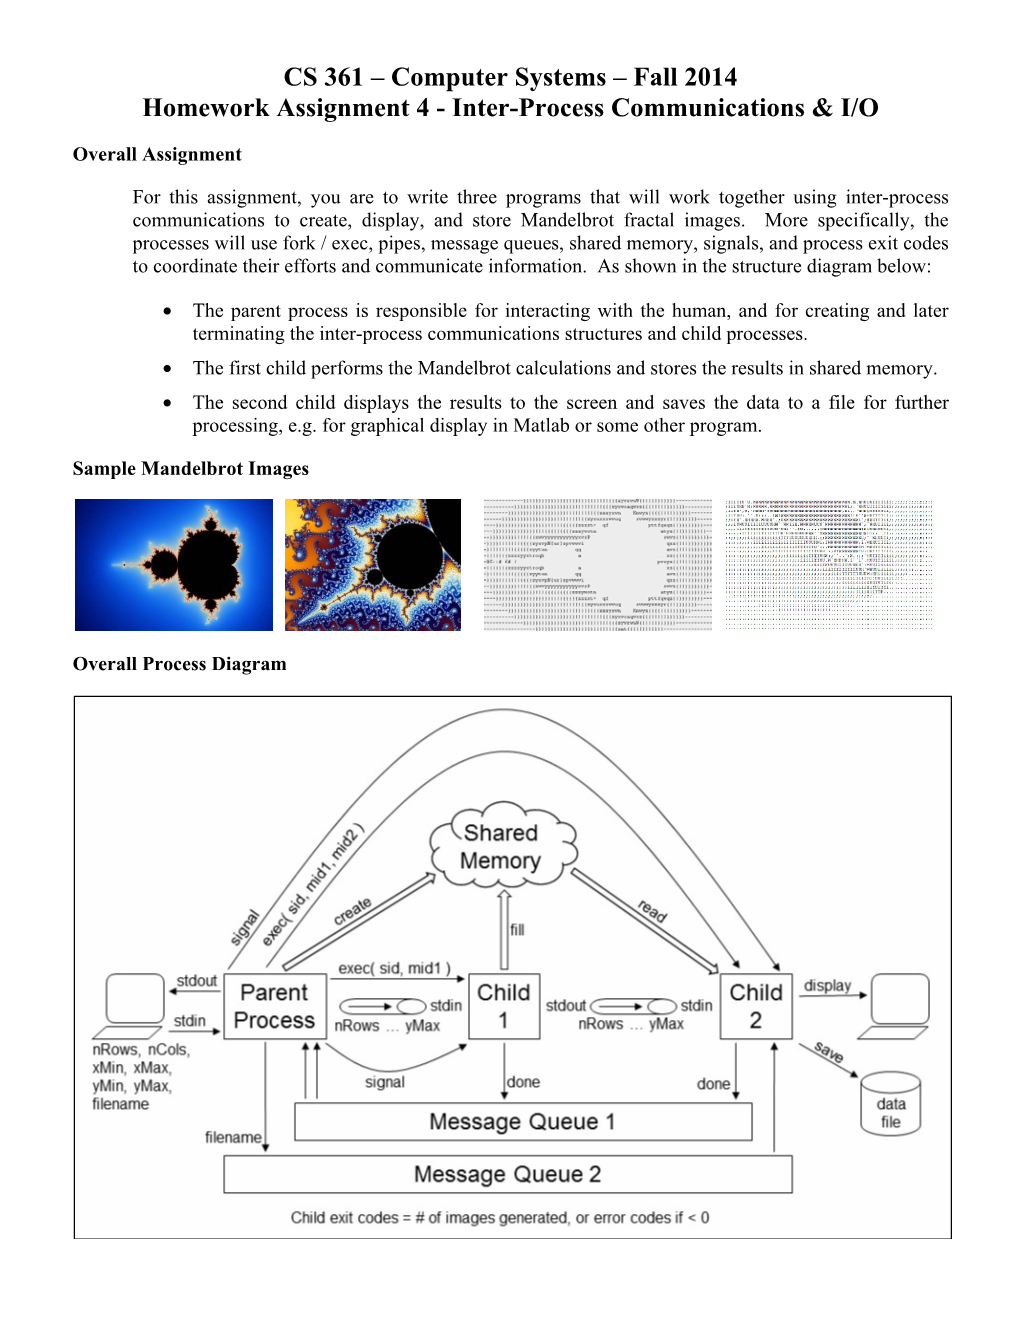 CS 361 – Computer Systems – Fall 2014 Homework Assignment 4 - Inter-Process Communications & I/O